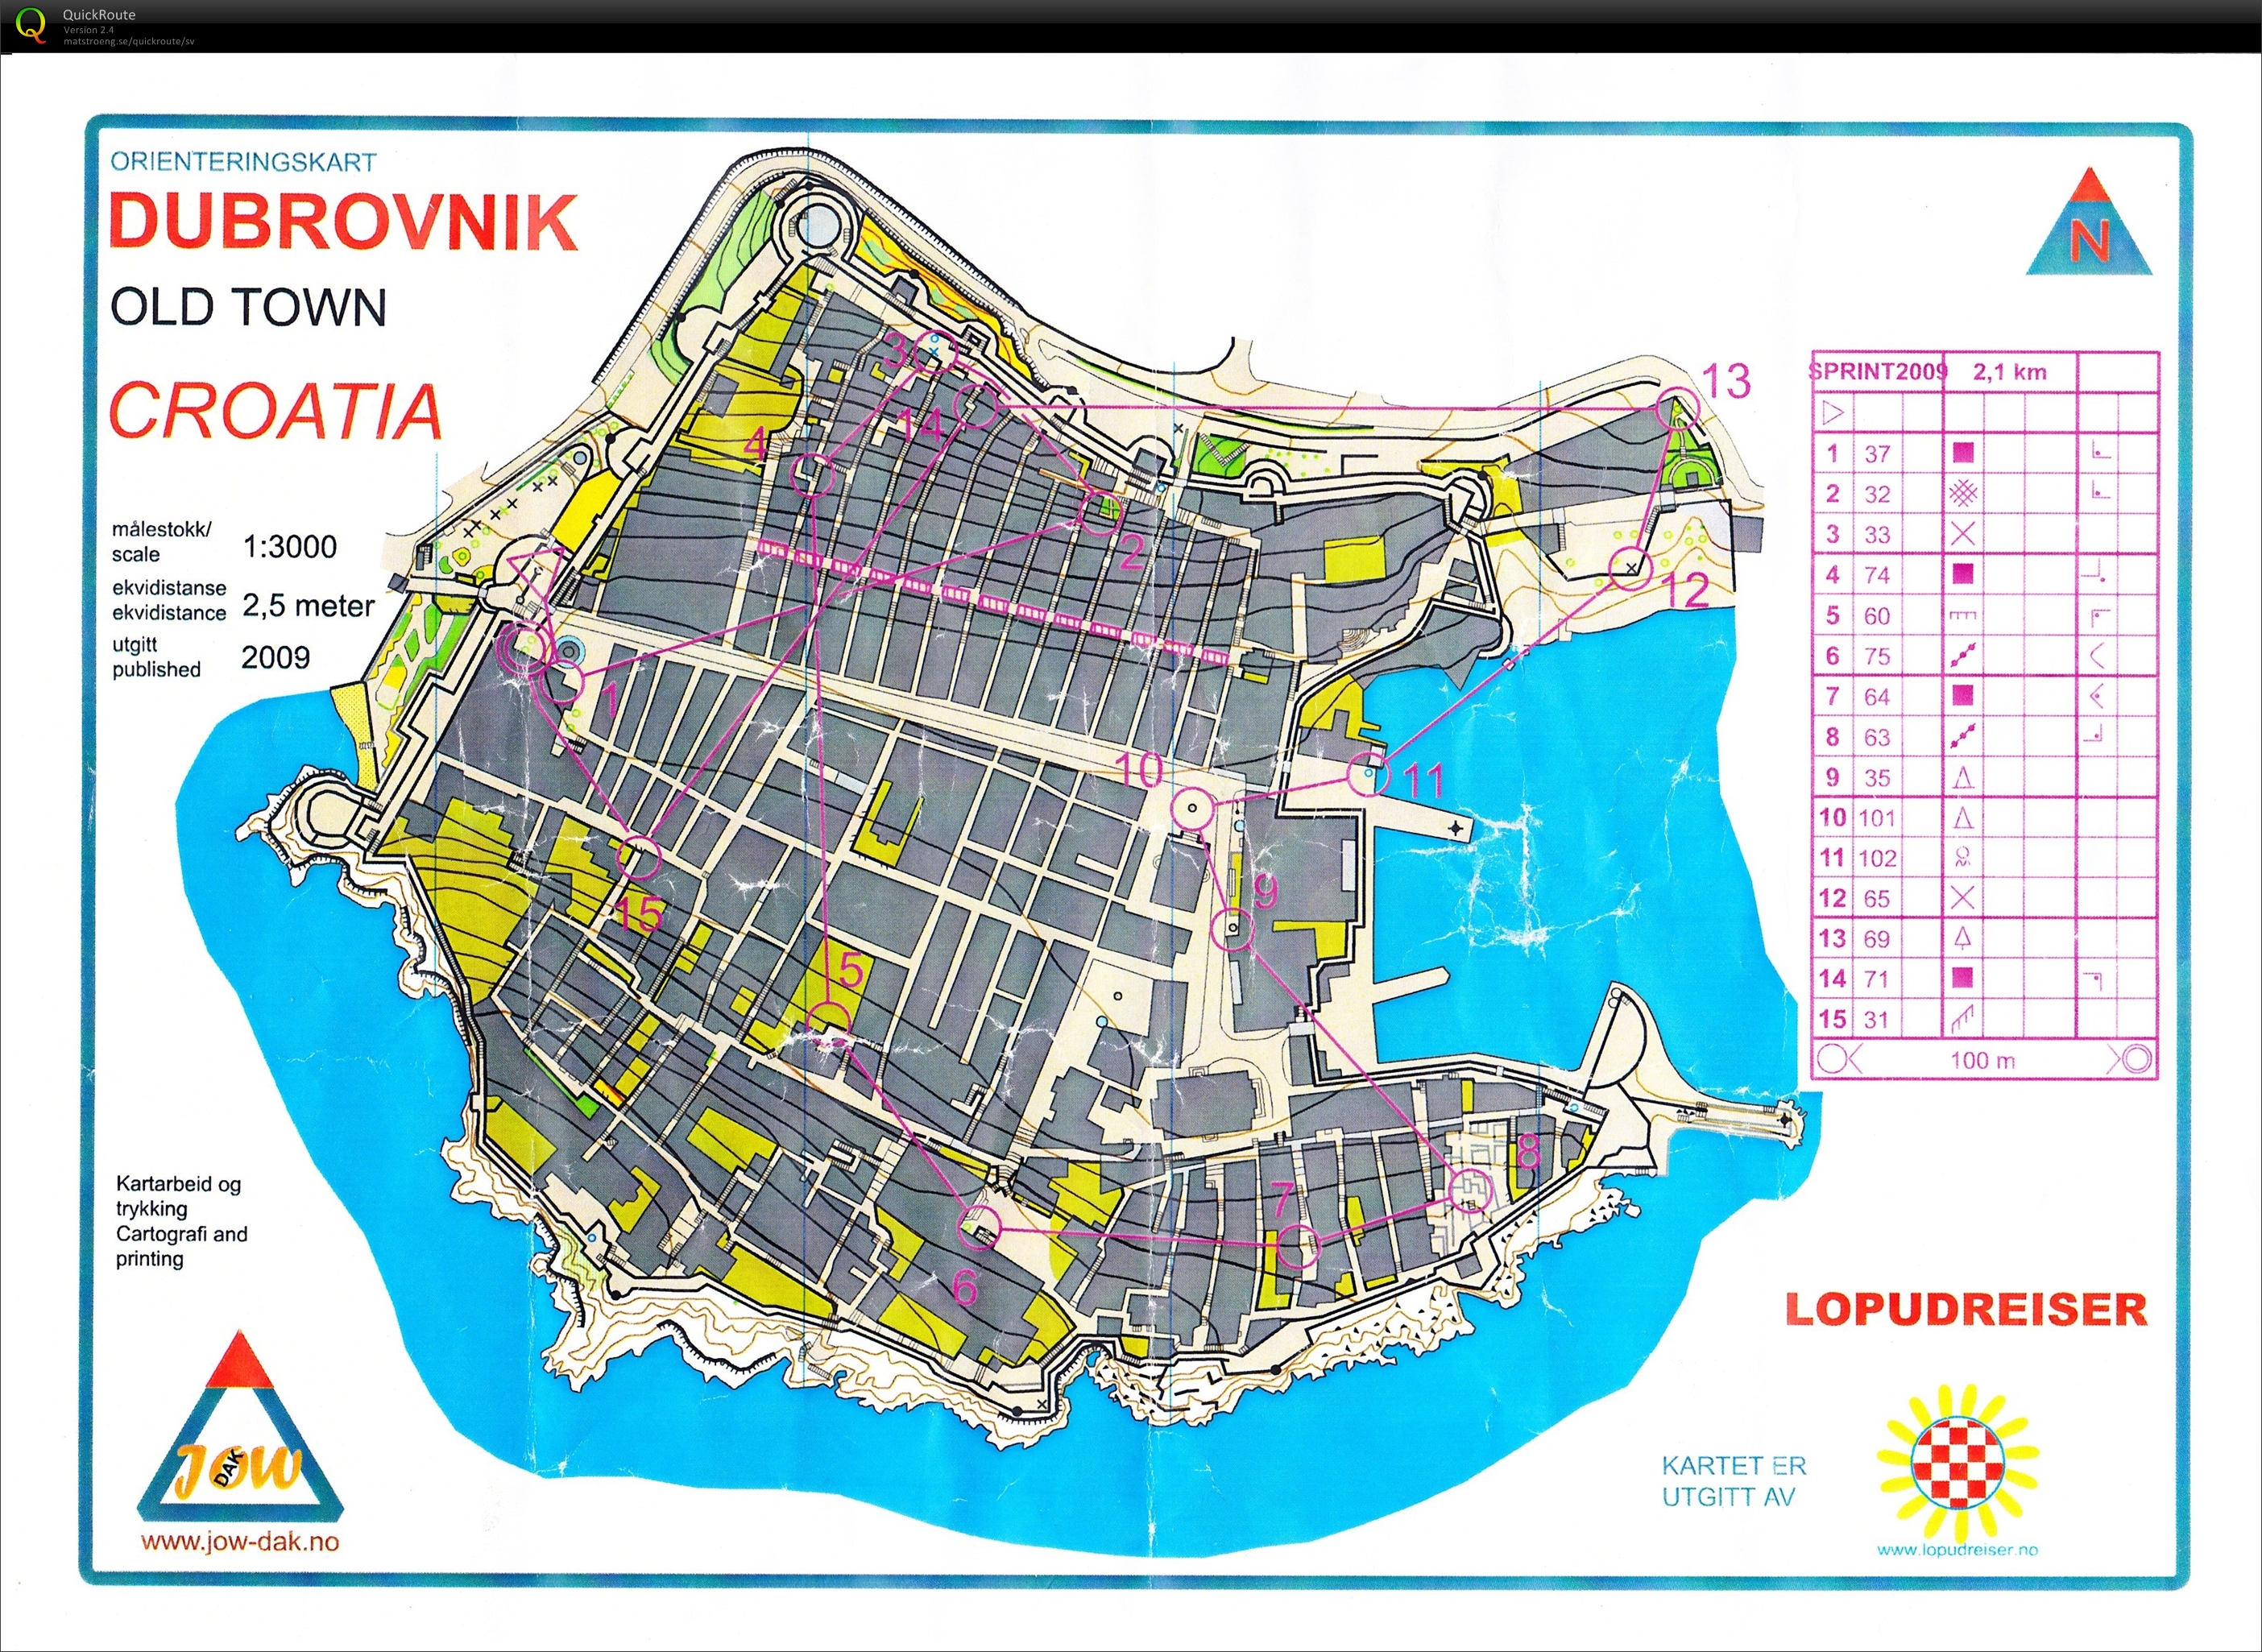 Sprinttrening, Dubrovnik (27.07.2013)